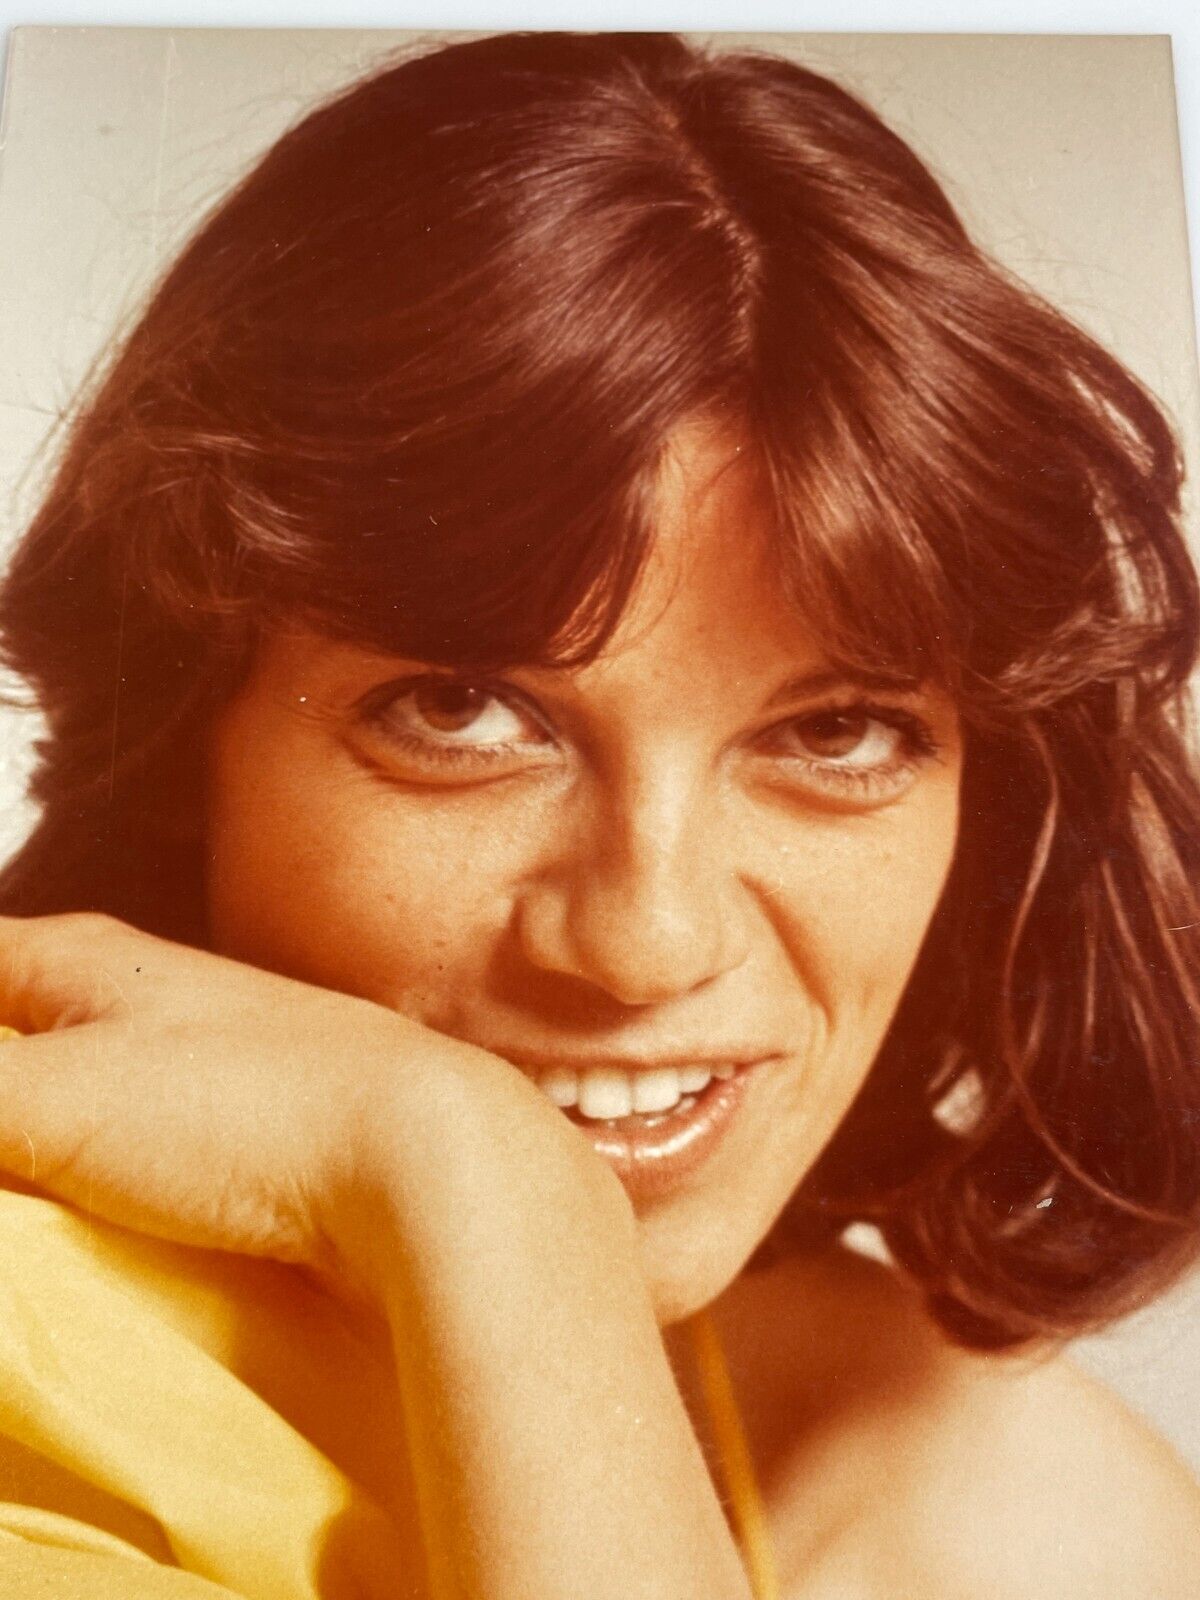 K7 Photograph Lovely Pretty Woman Close Up Portrait Artistic 1980's 5X7